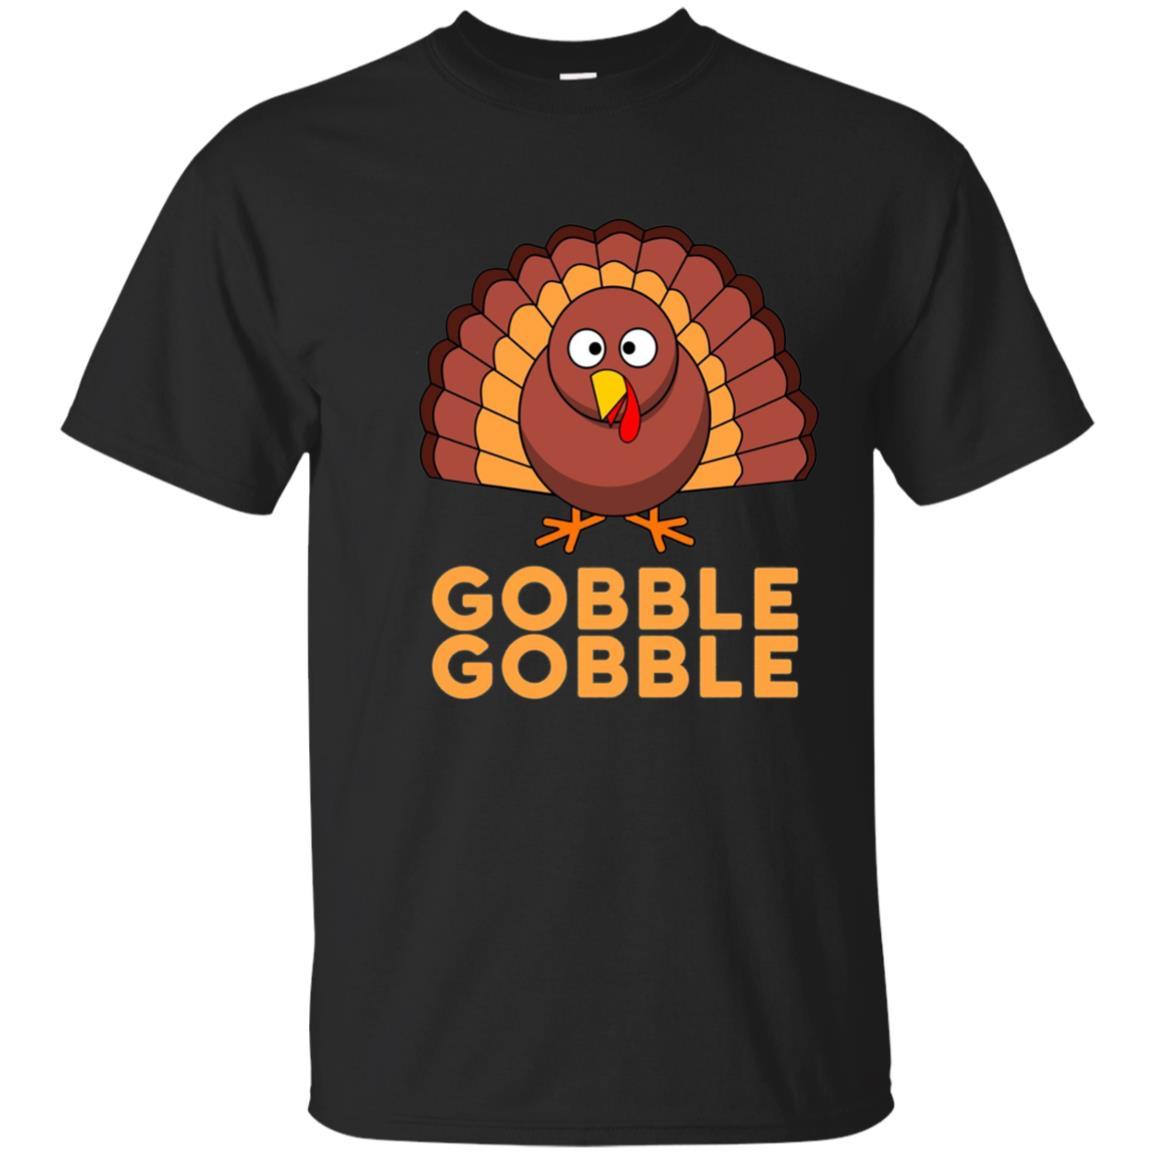 Funny Thanksgiving Shirt - Gobble Gobble Turkey T-shirt